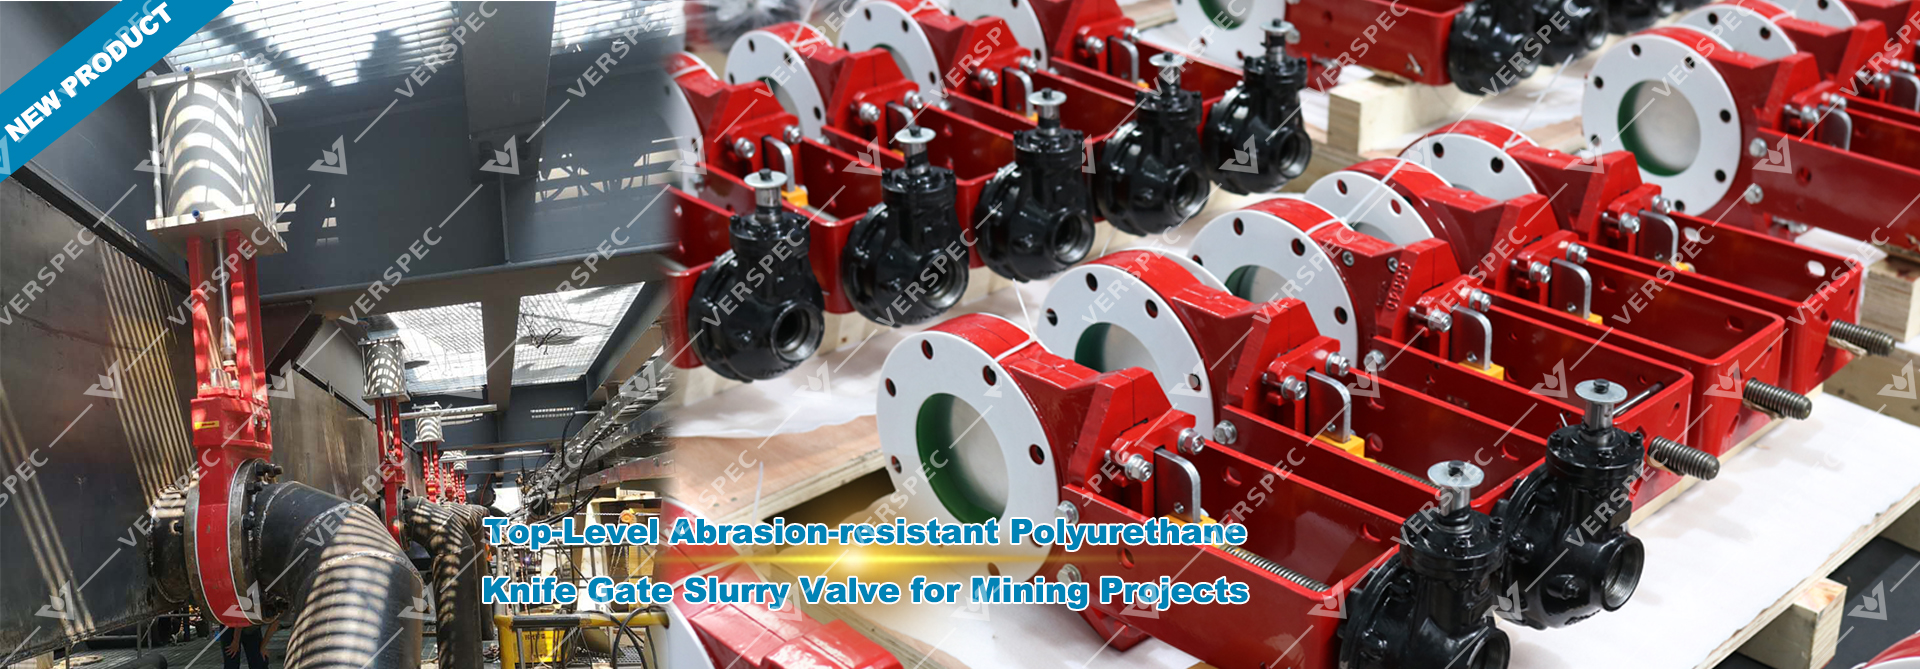 Top-Level Abrasion-resistant Polyurethane